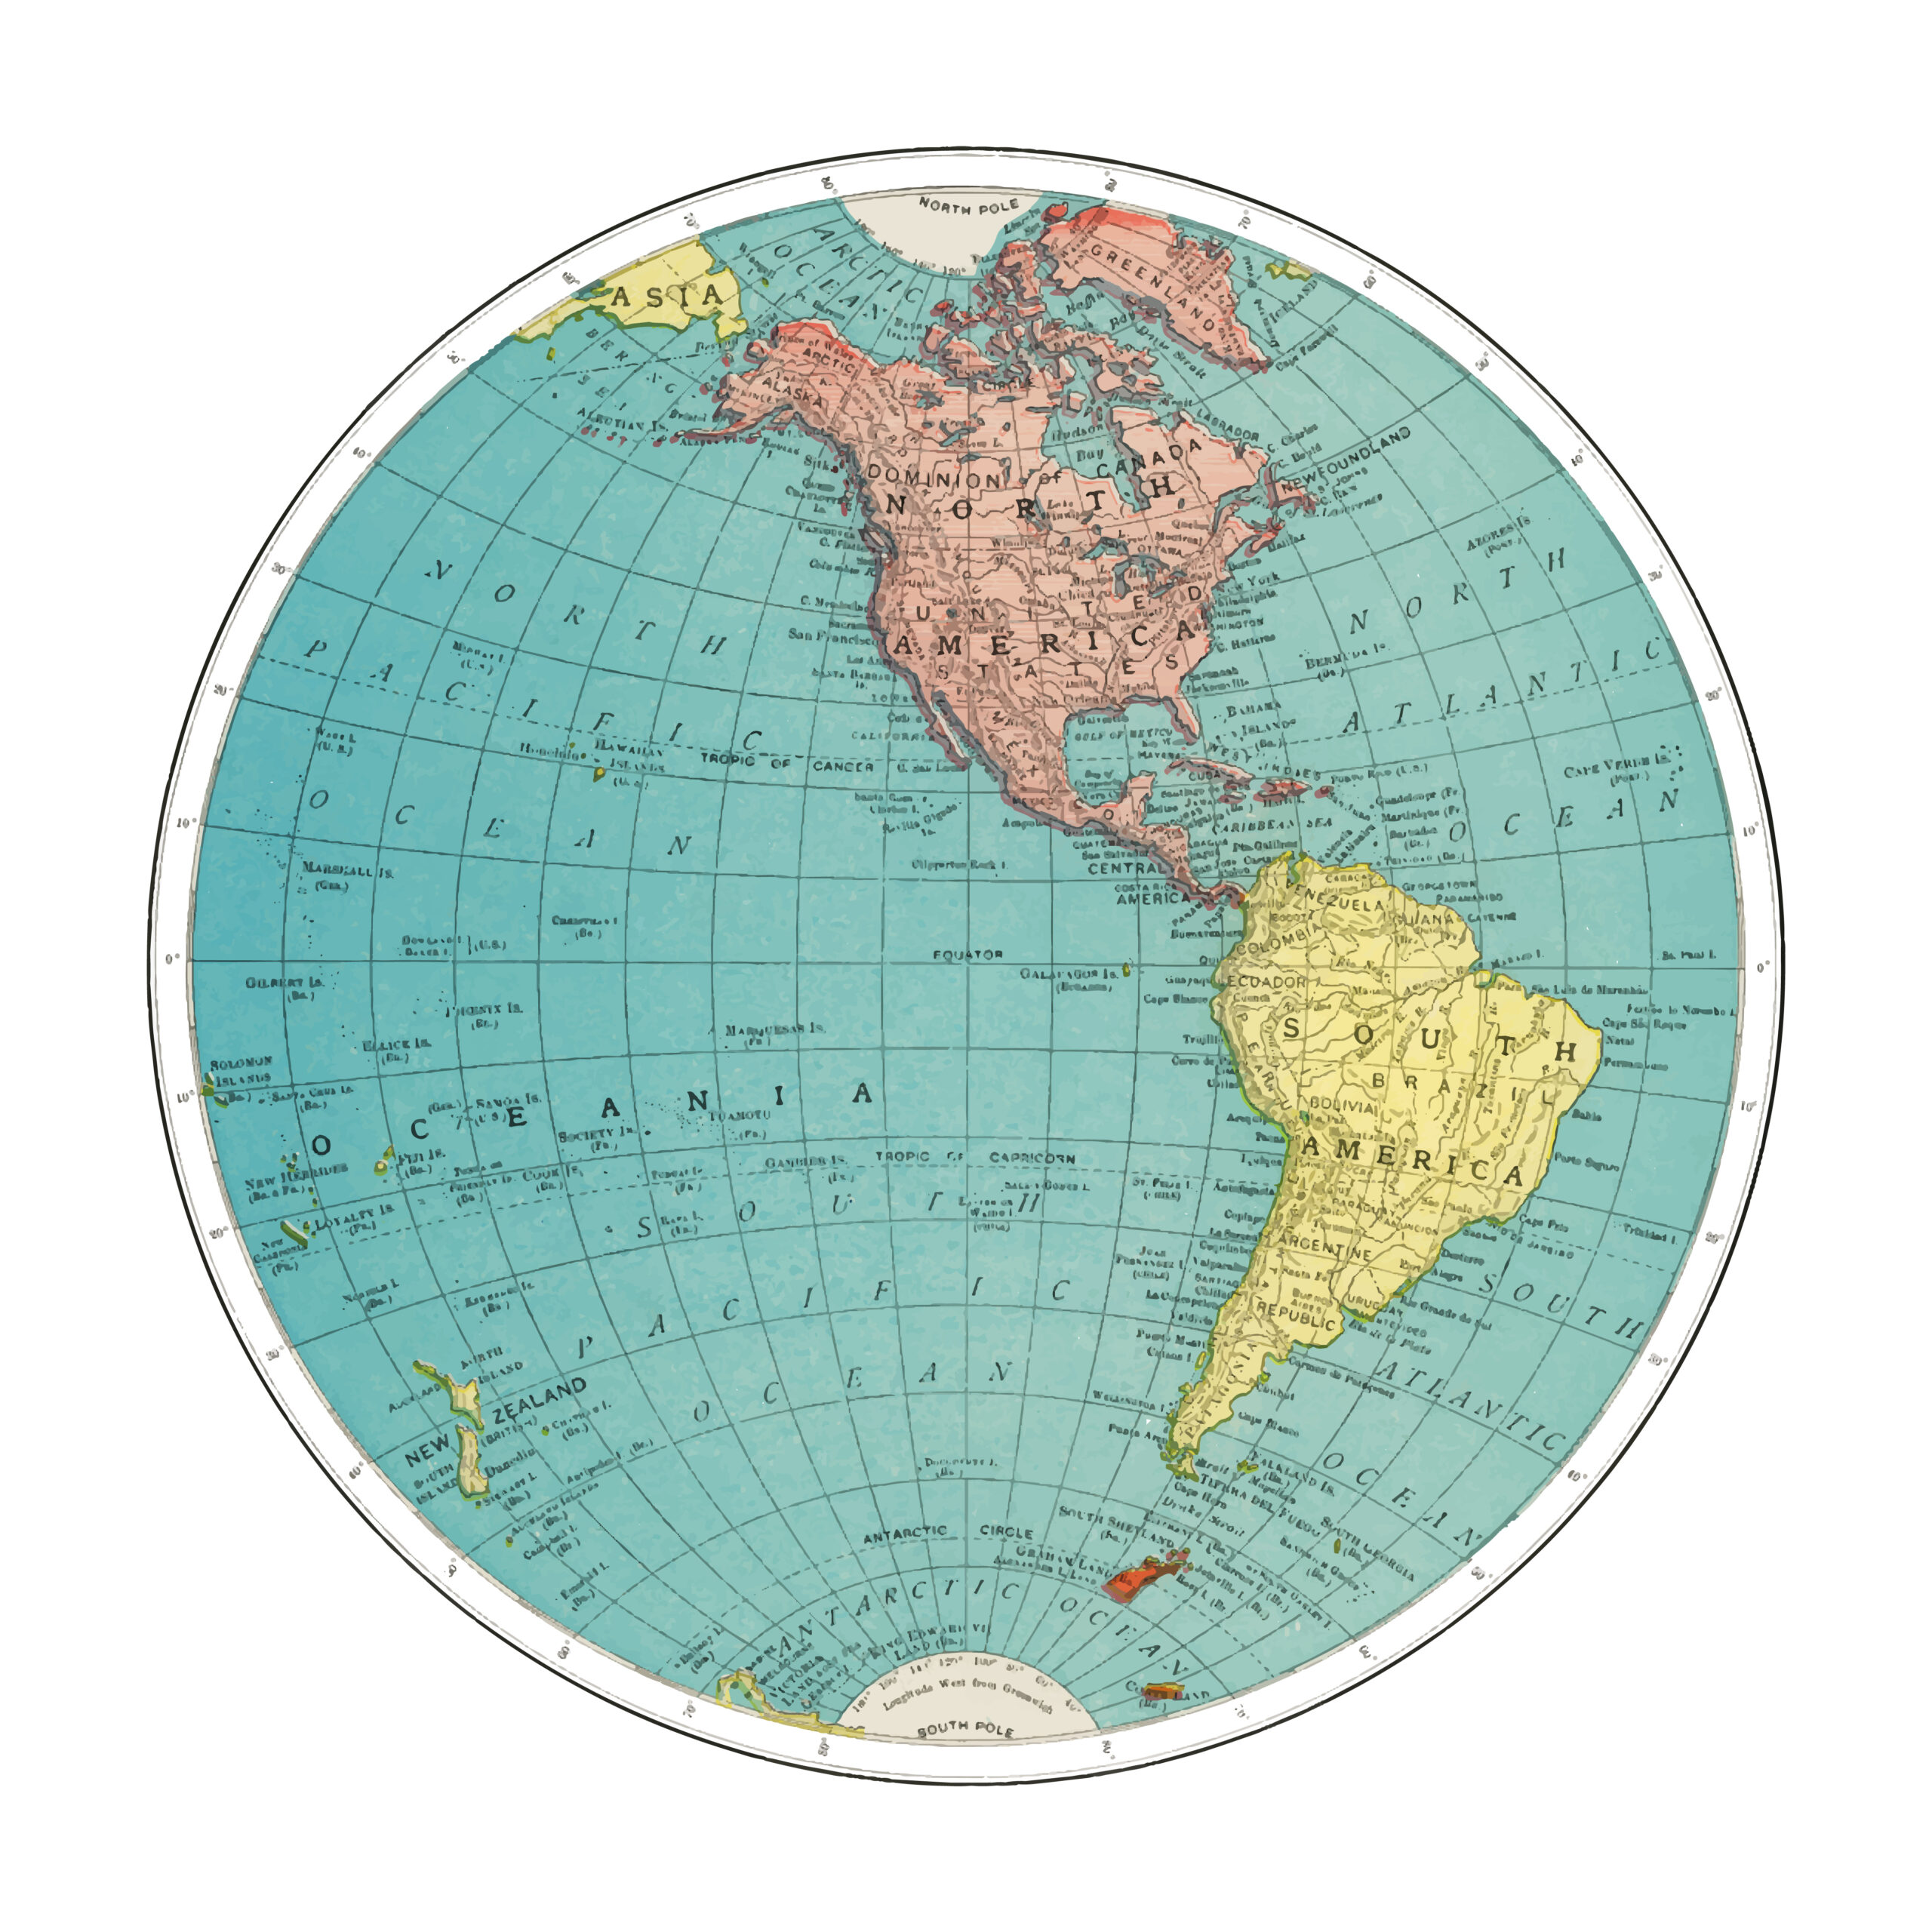 Western Hemisphere World Atlas By Rand McNally And Co 1908 